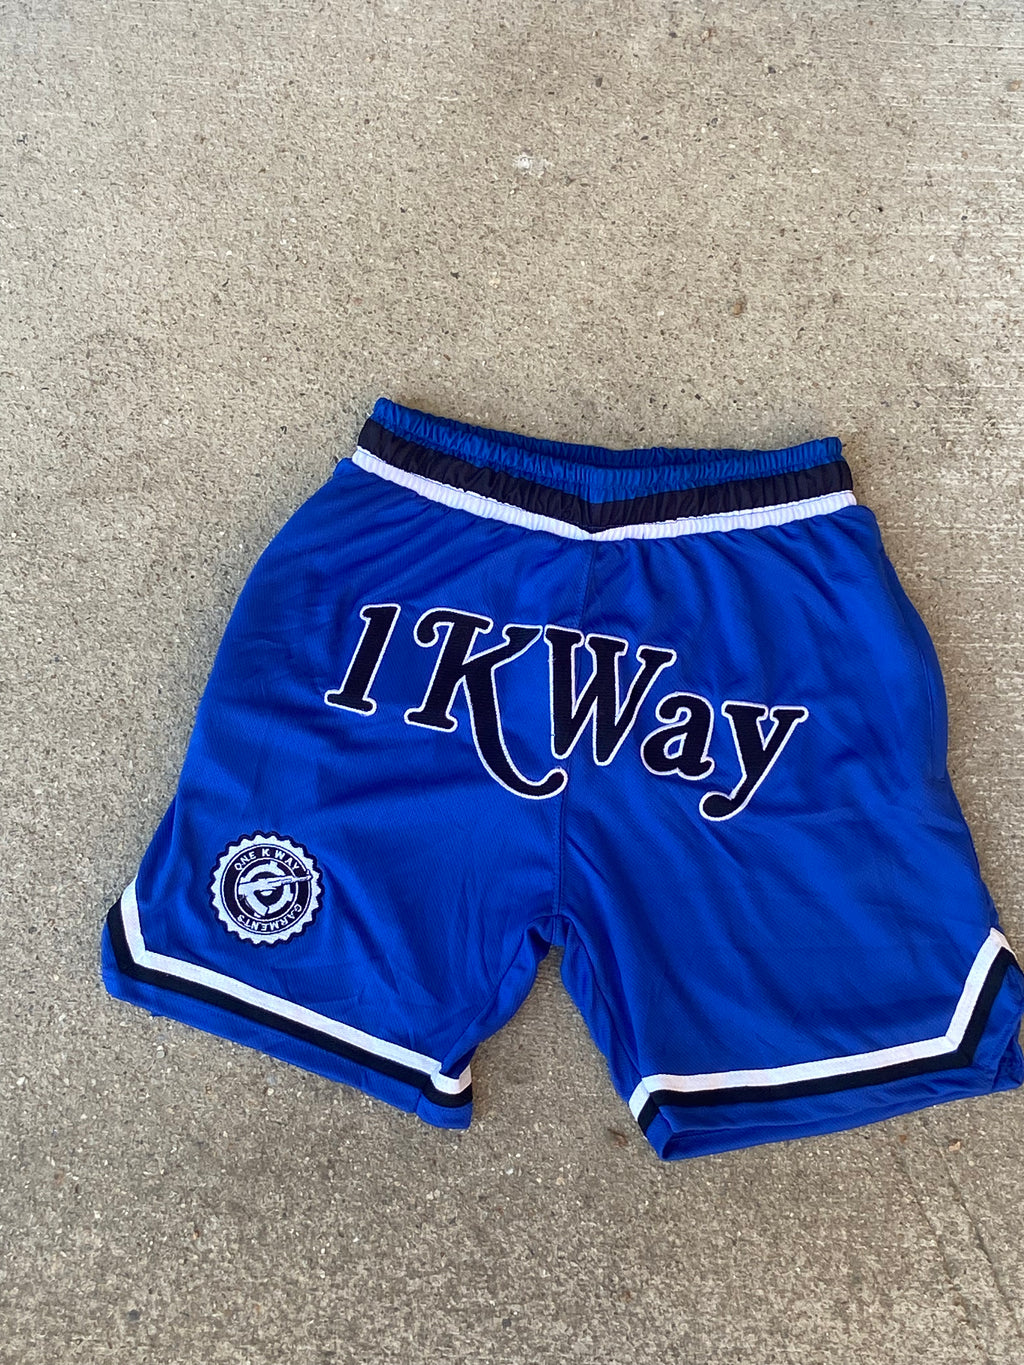 1kway Basketball shorts